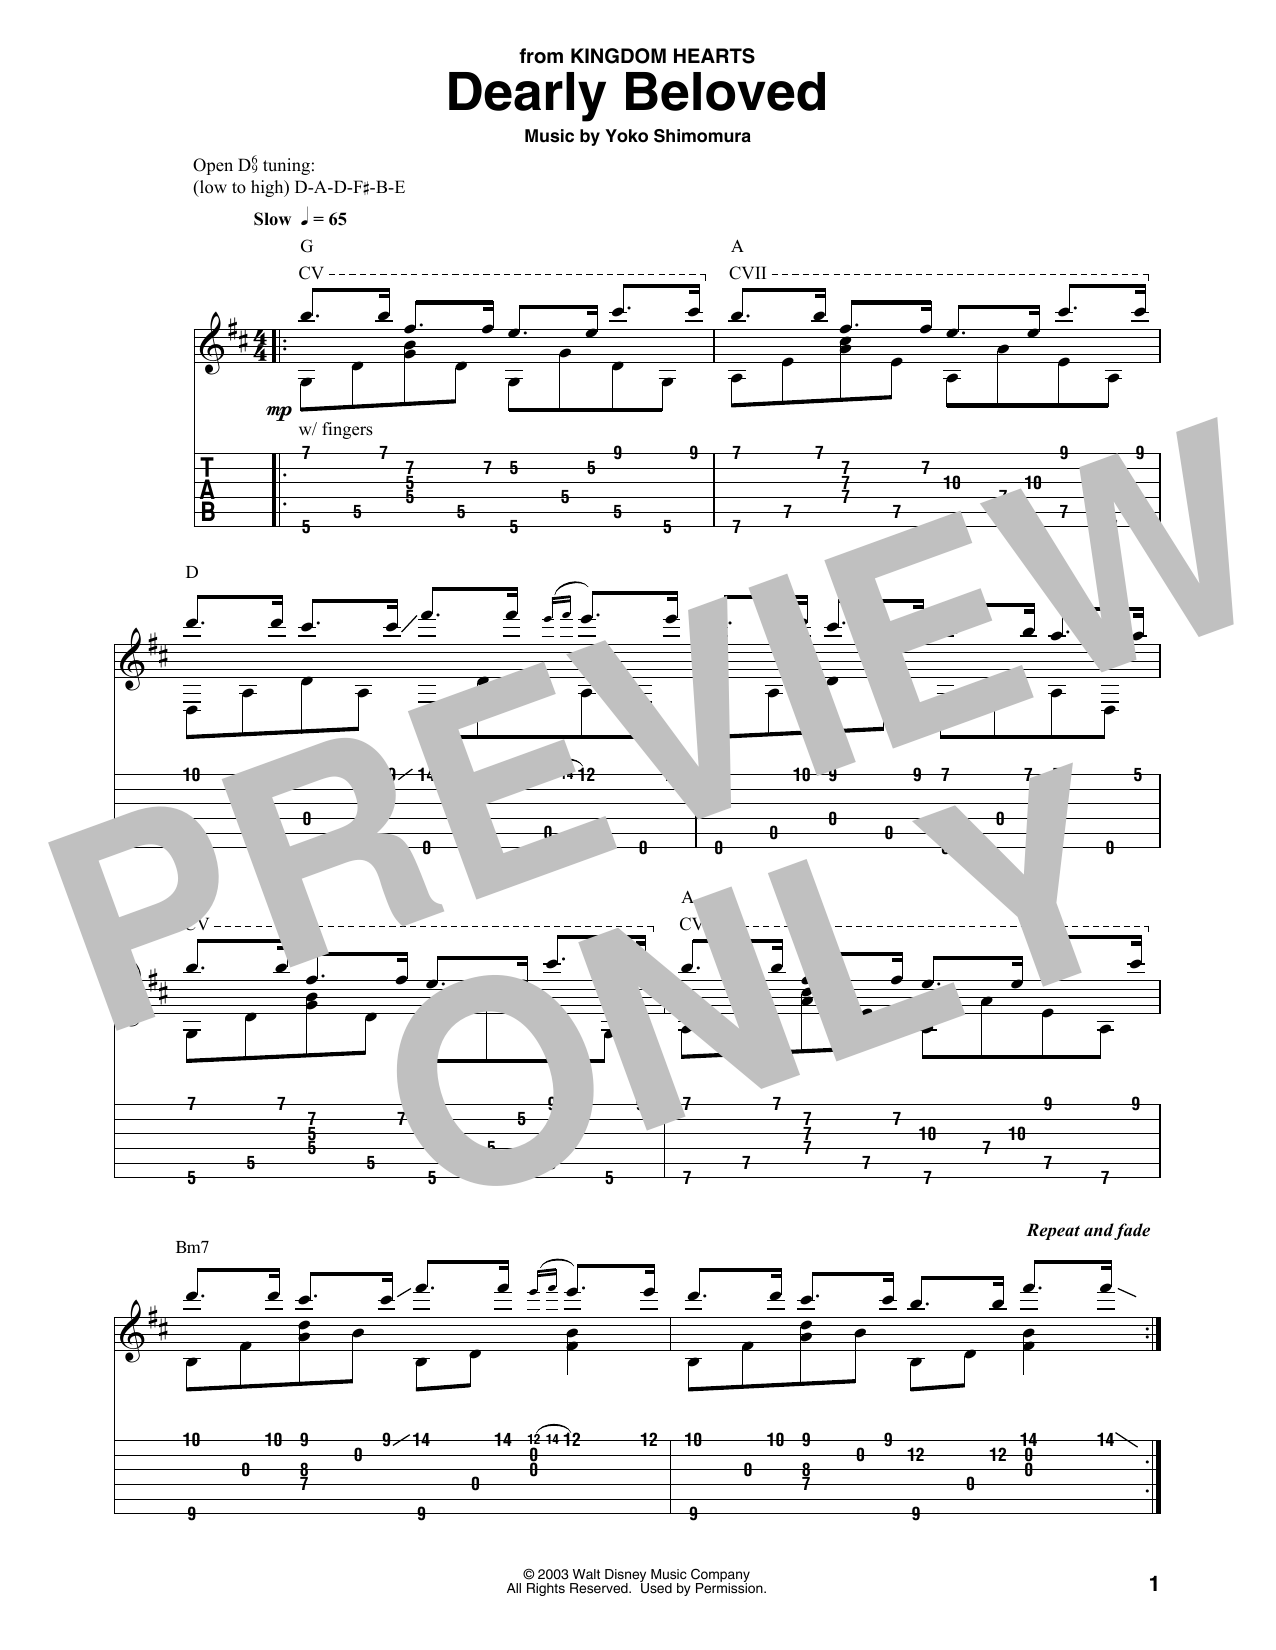 Download Yoko Shimomura Dearly Beloved (from Kingdom Hearts) Sheet Music